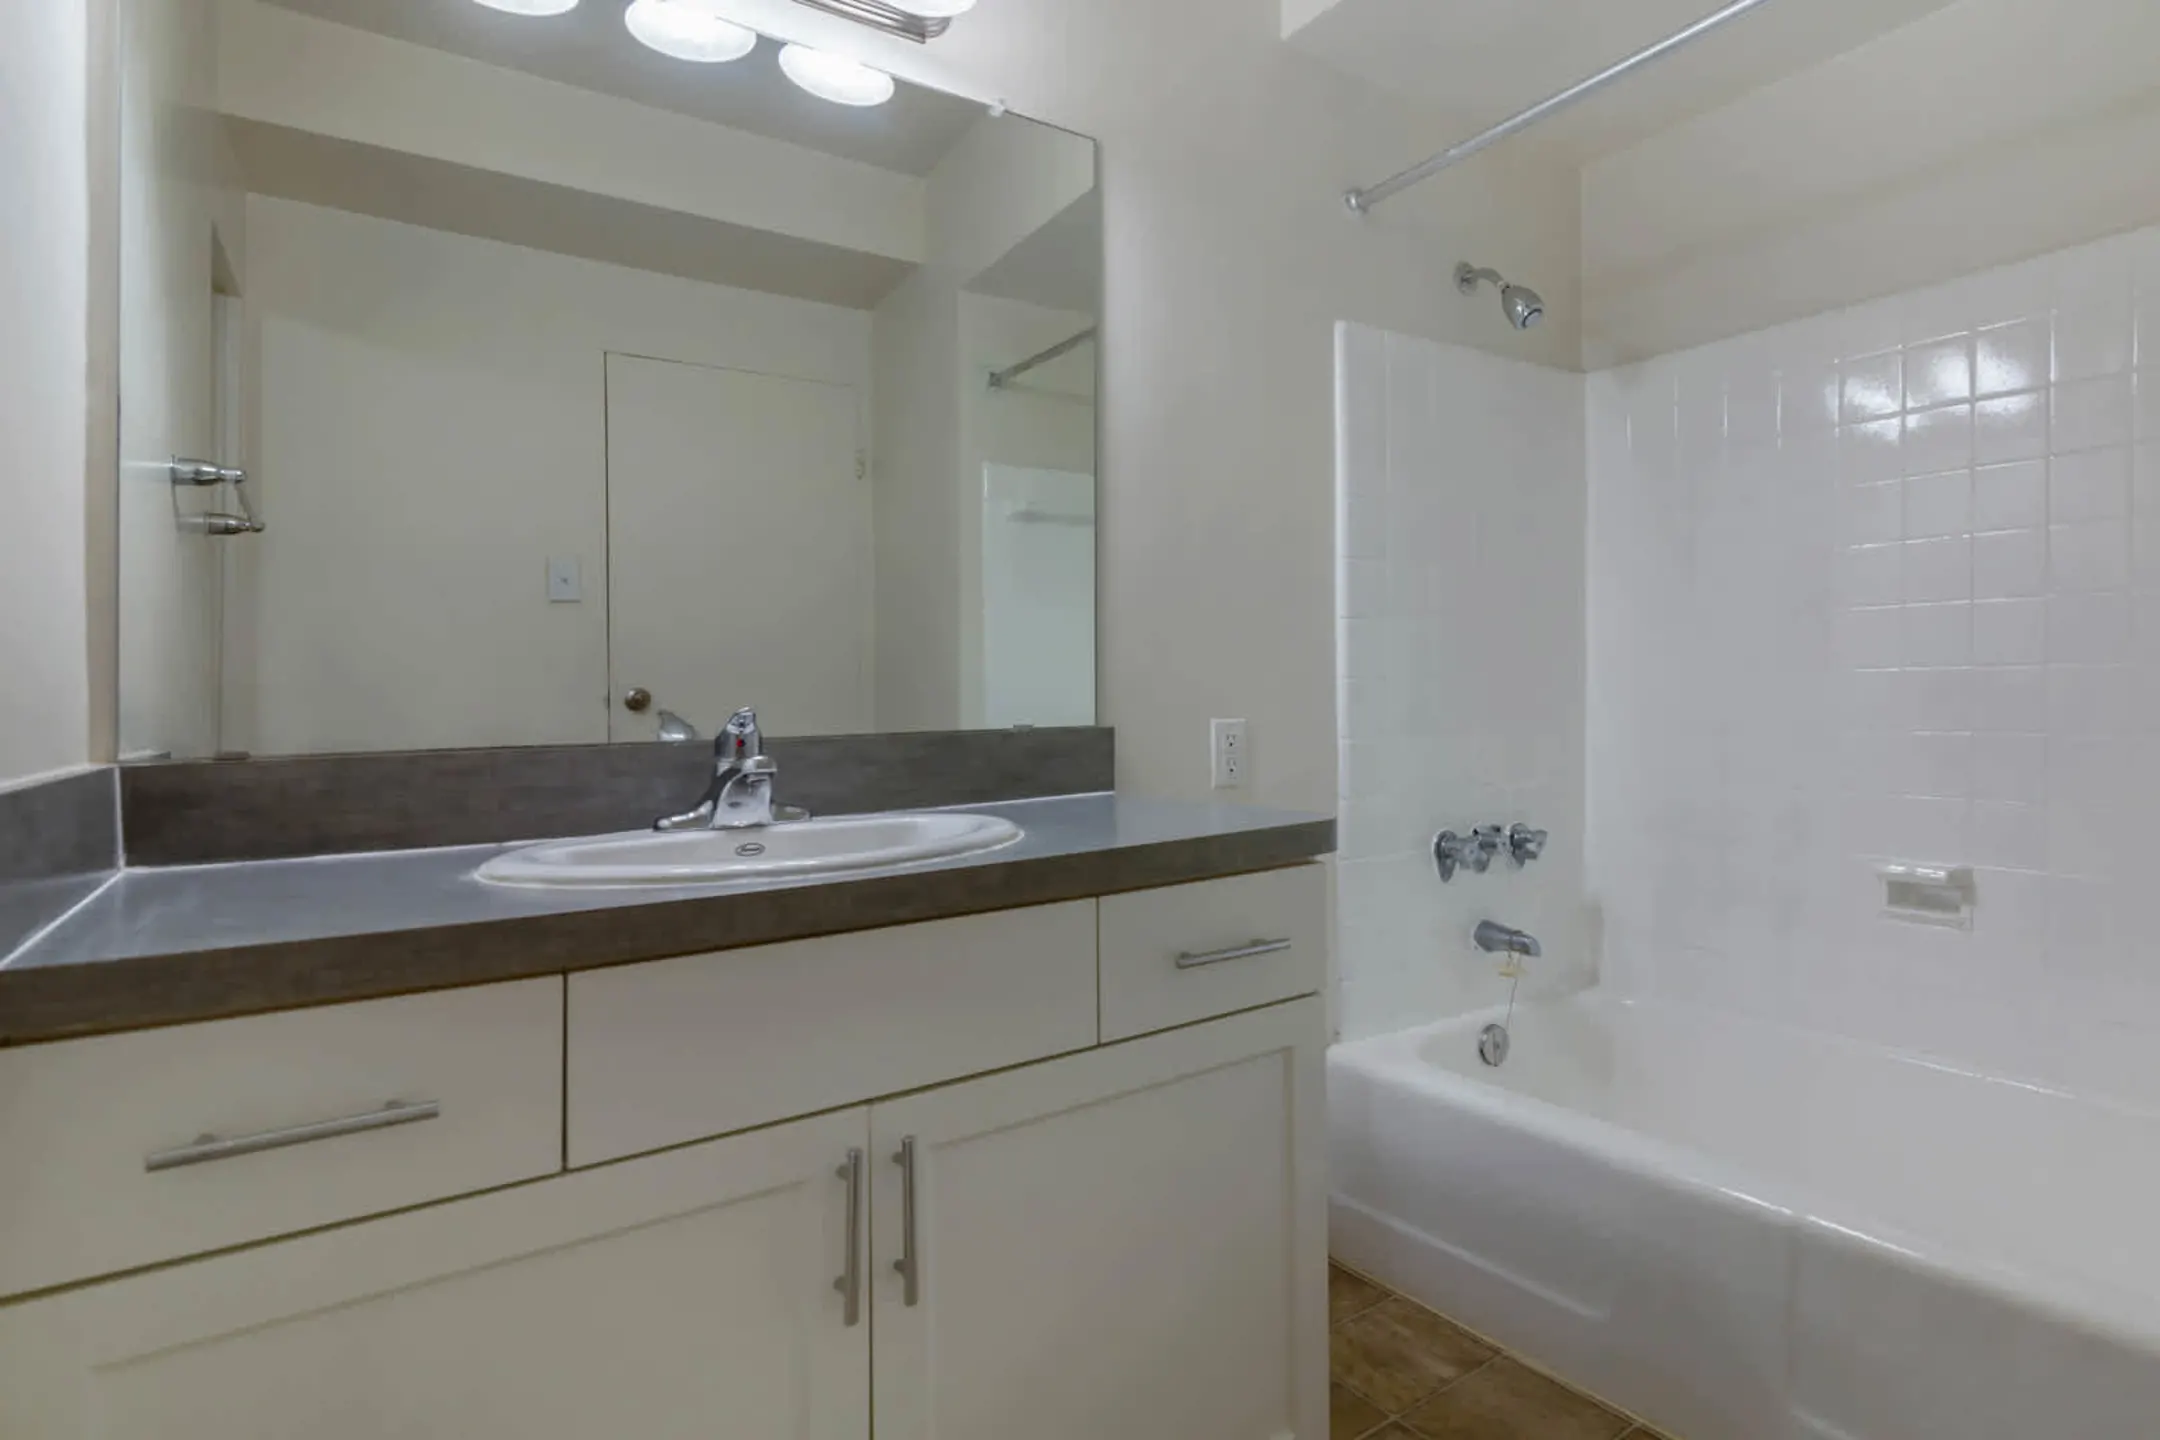 Bathroom - 1500 Mass - Washington, DC